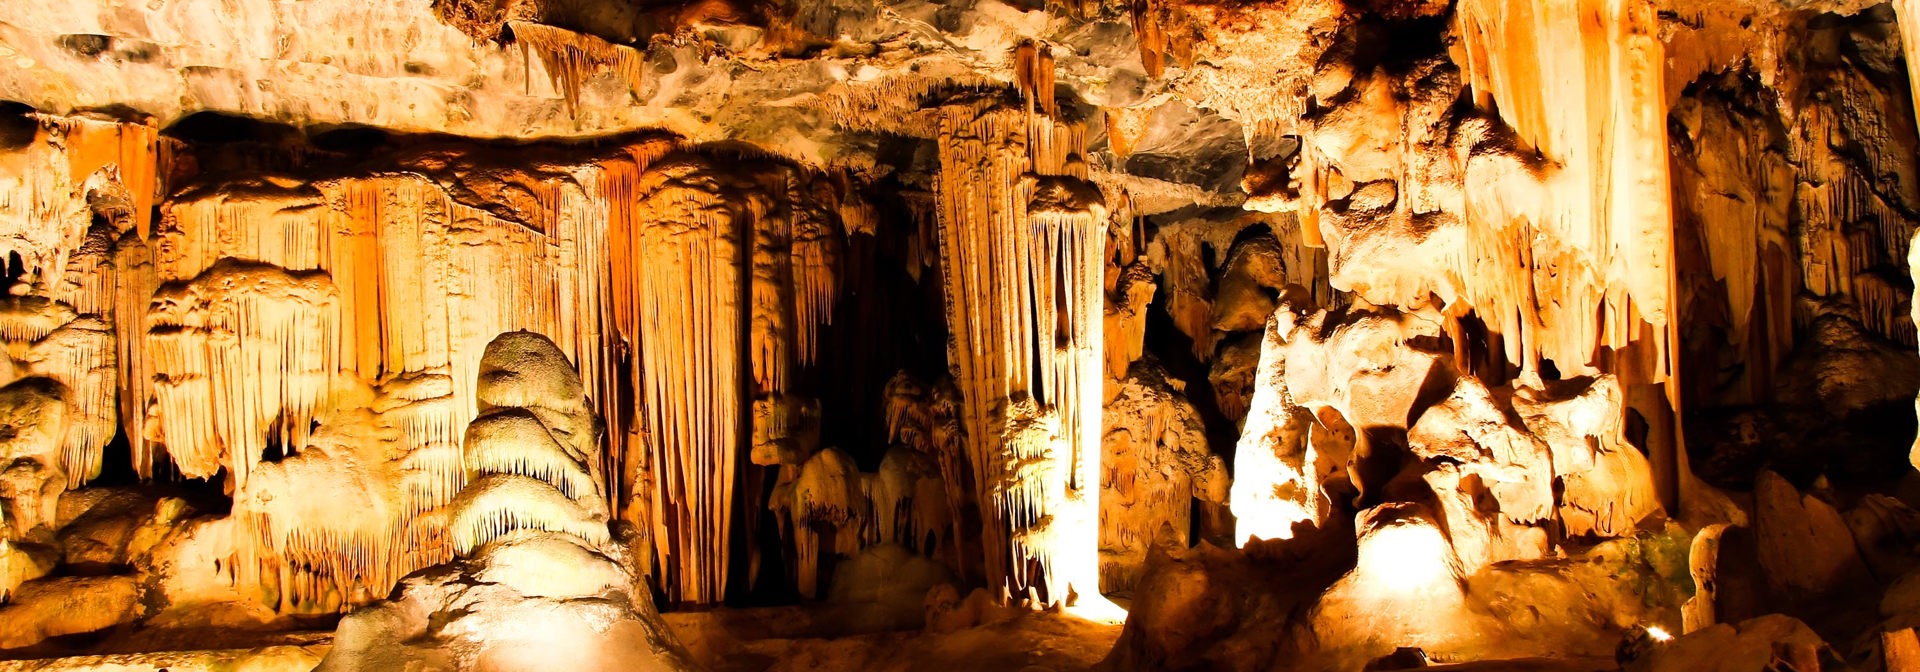 sydafrika - oudtshoorn_cango caves_01